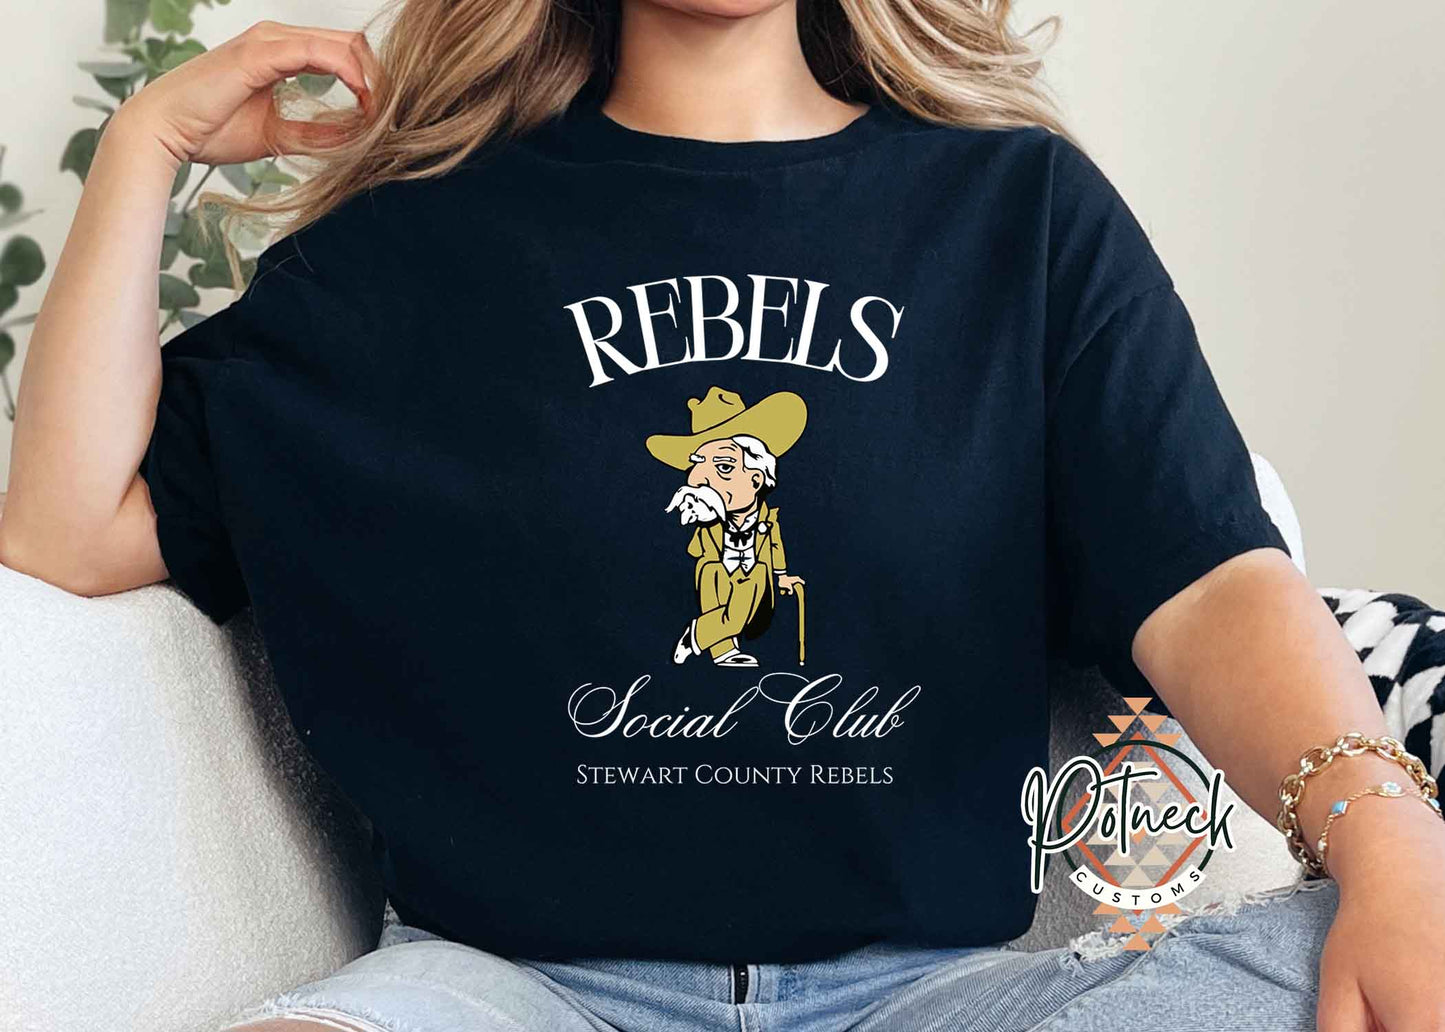 Rebels Social Club shirt